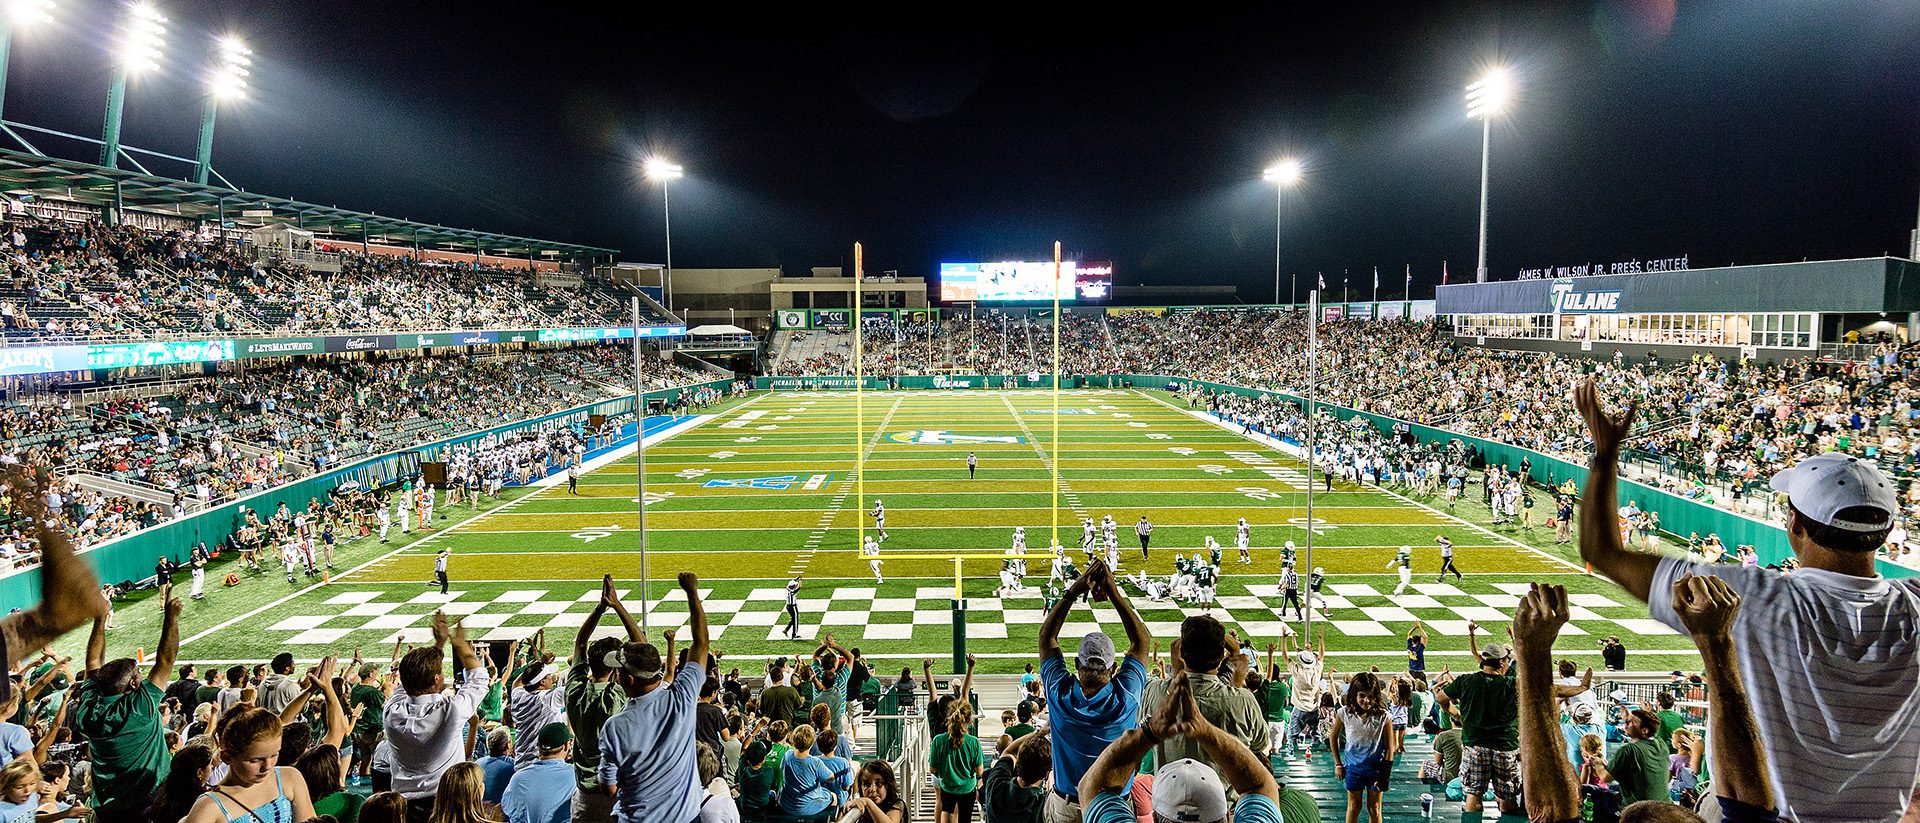 Image of fans cheering during a night football game at Tulane University Yulman Stadium